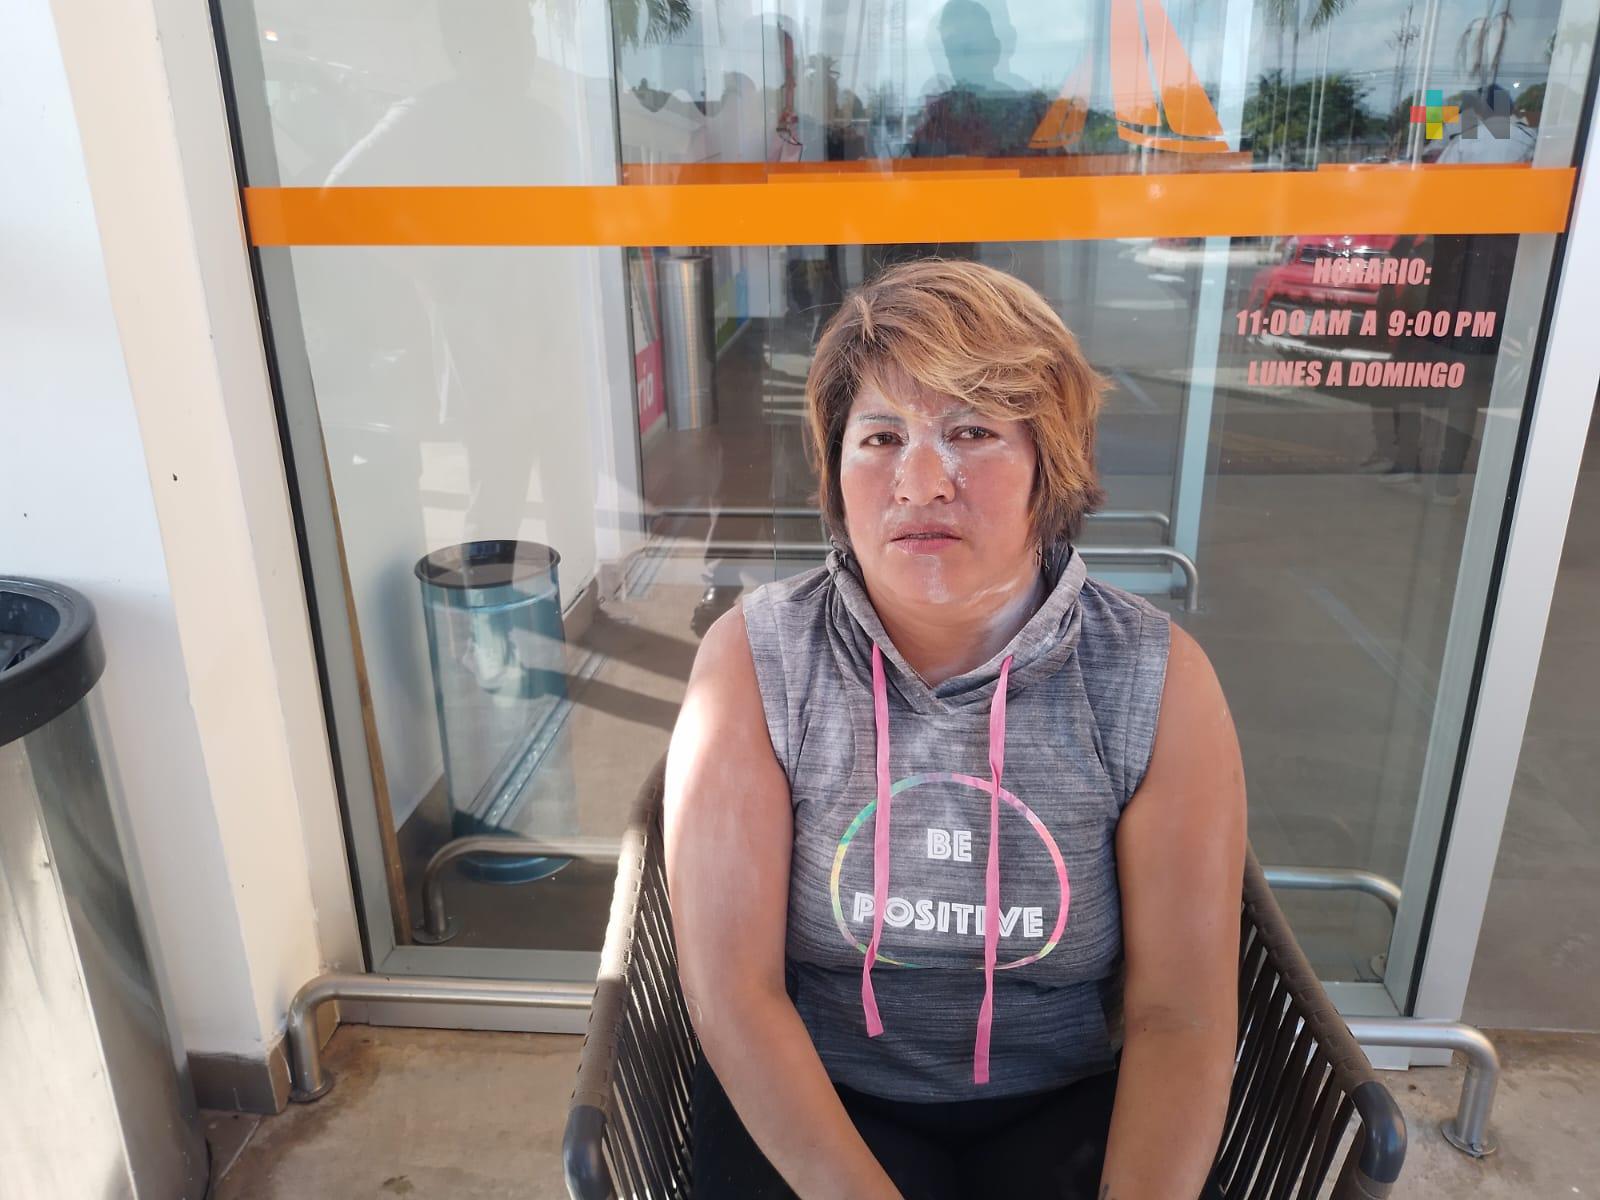 Desplome de puerta automática en plaza comercial de Coatzacoalcos lesiona a mujer